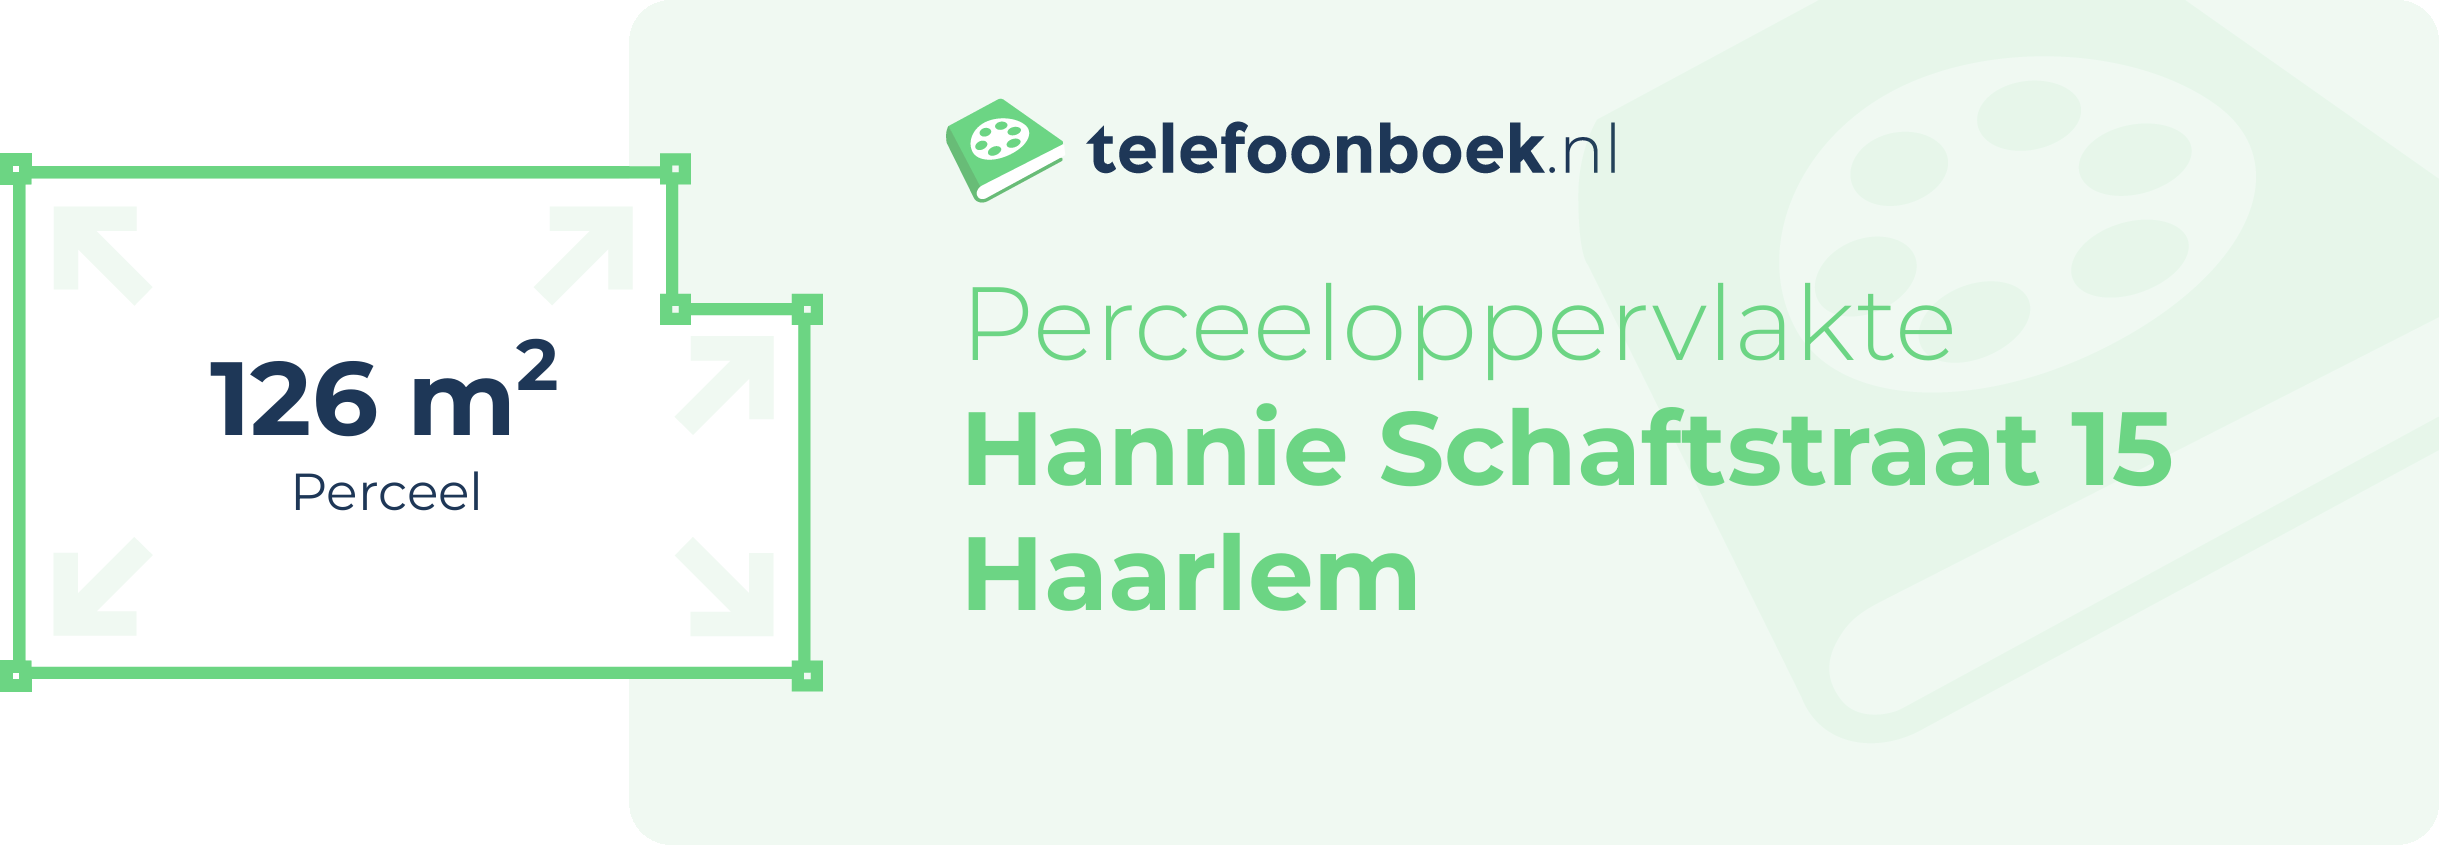 Perceeloppervlakte Hannie Schaftstraat 15 Haarlem